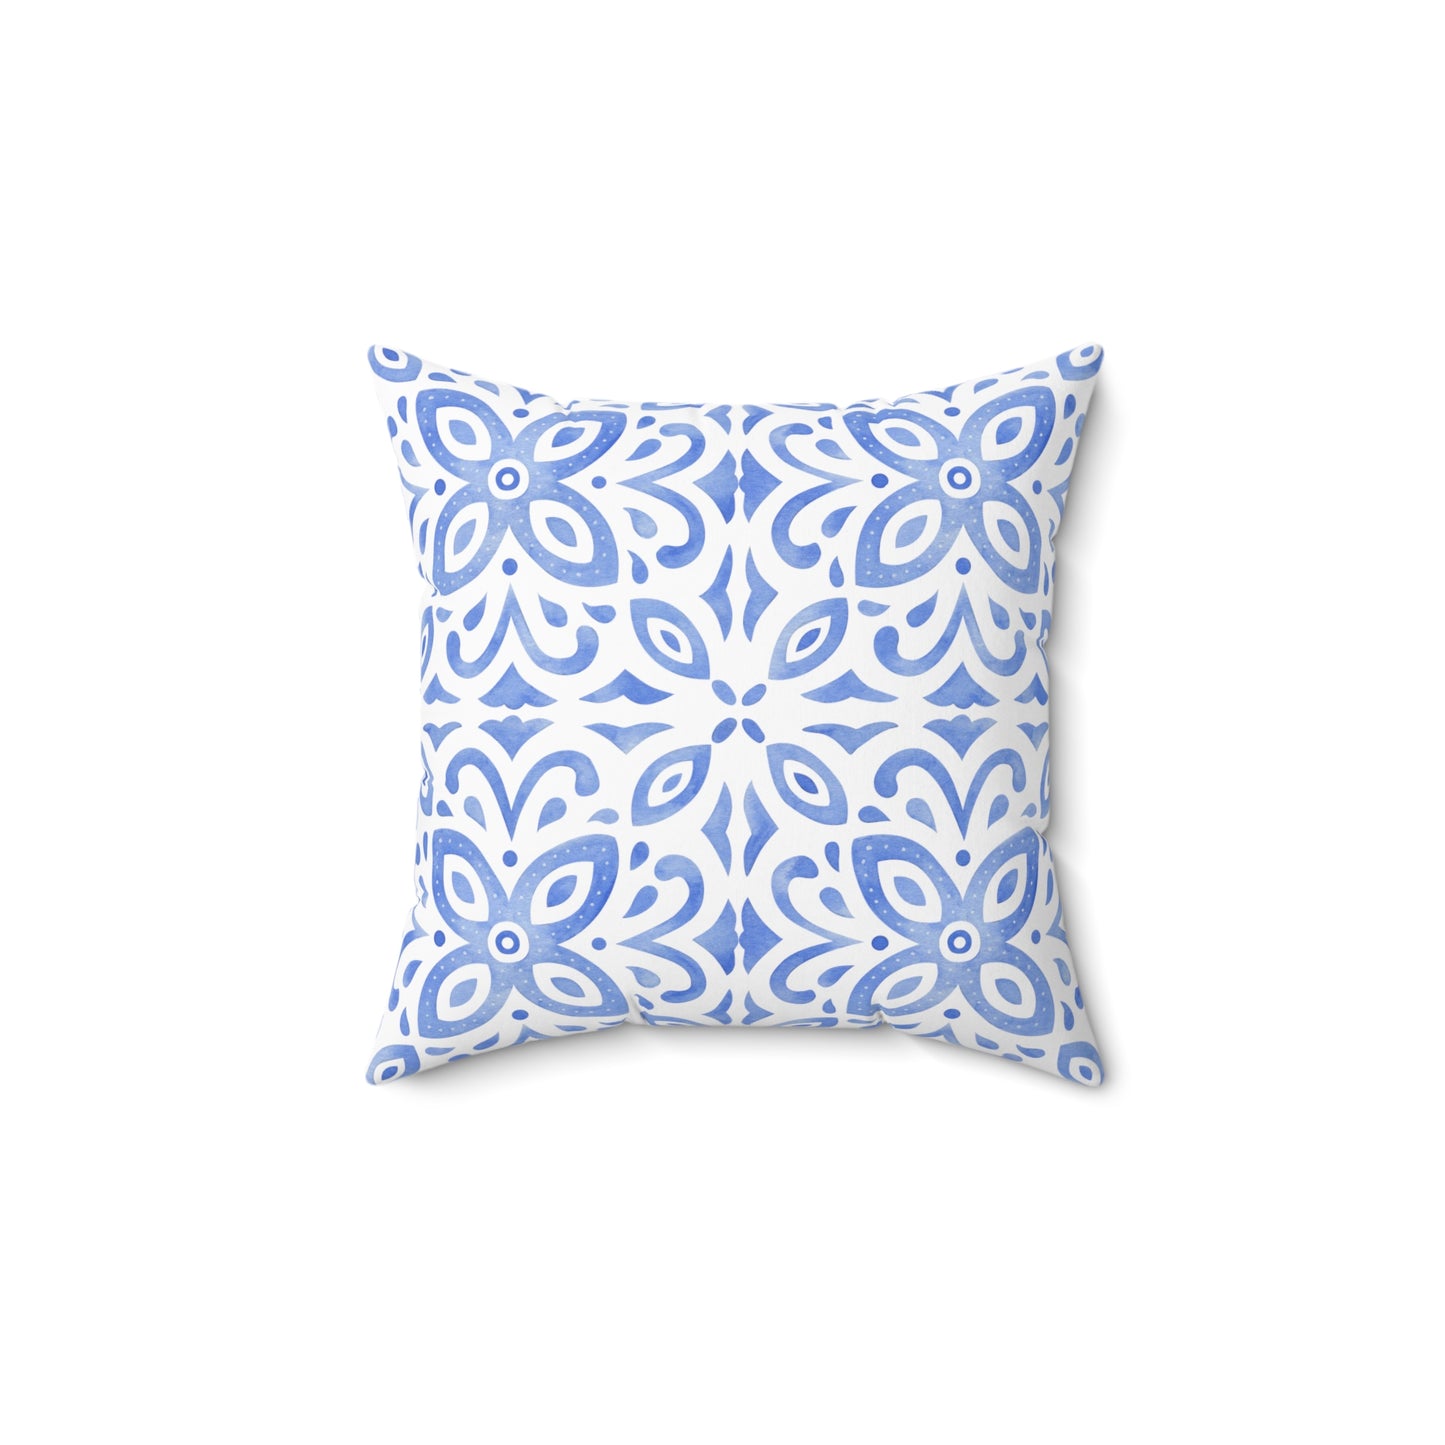 Blue tile print pillow